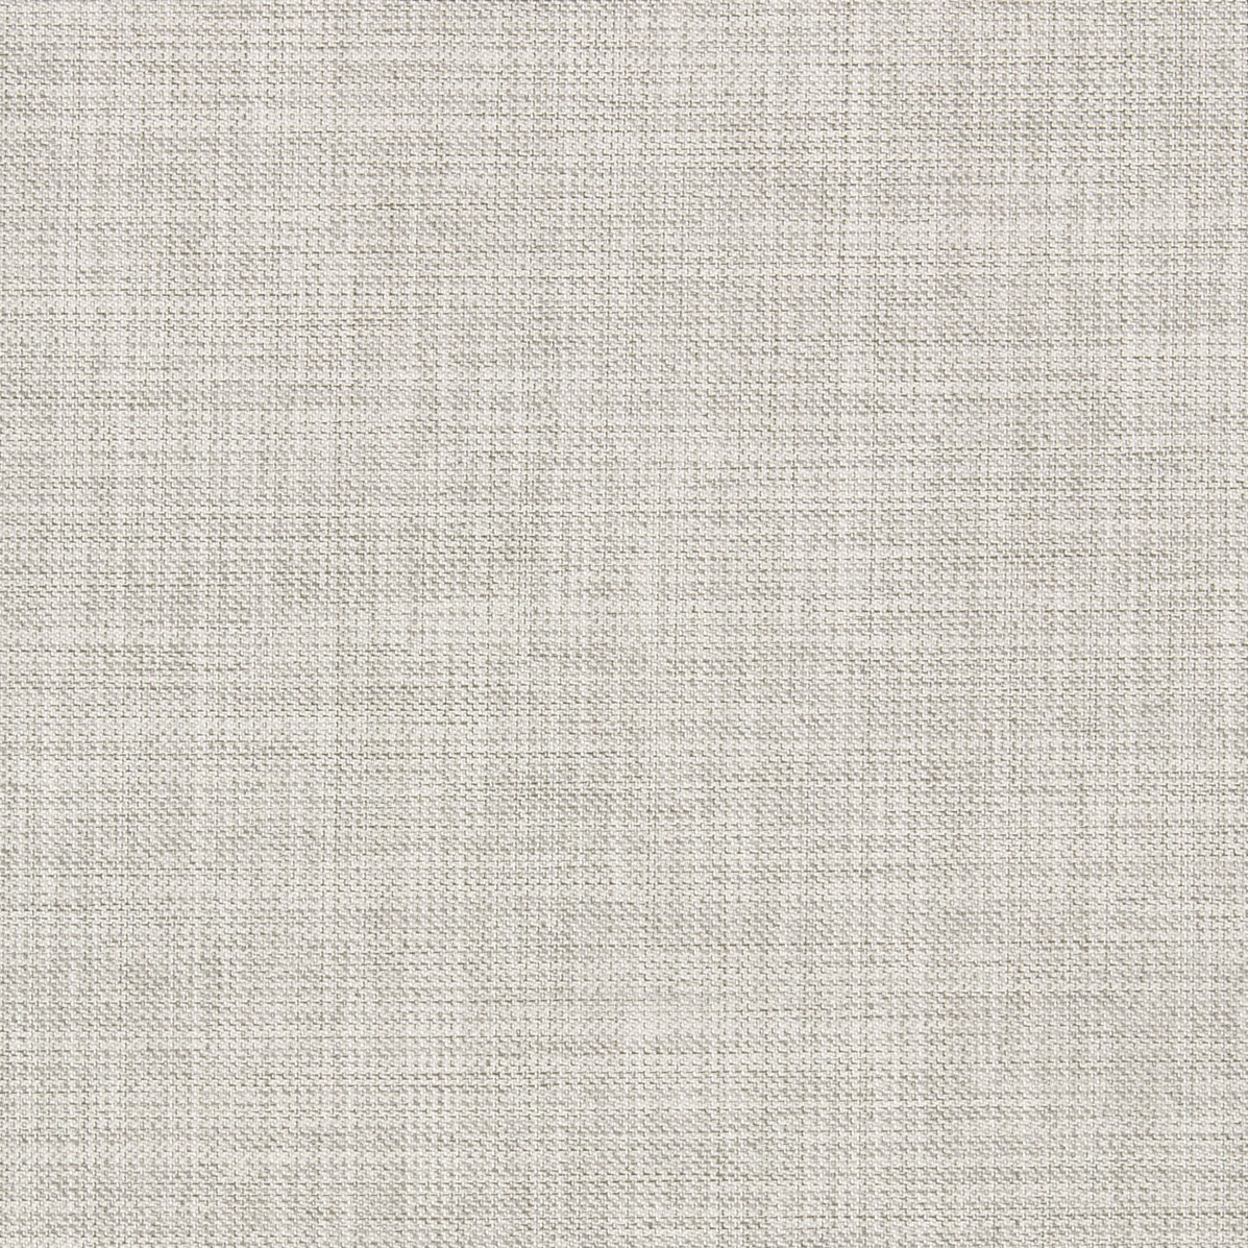 Allude - Method - Textiles - Materials - Herman Miller